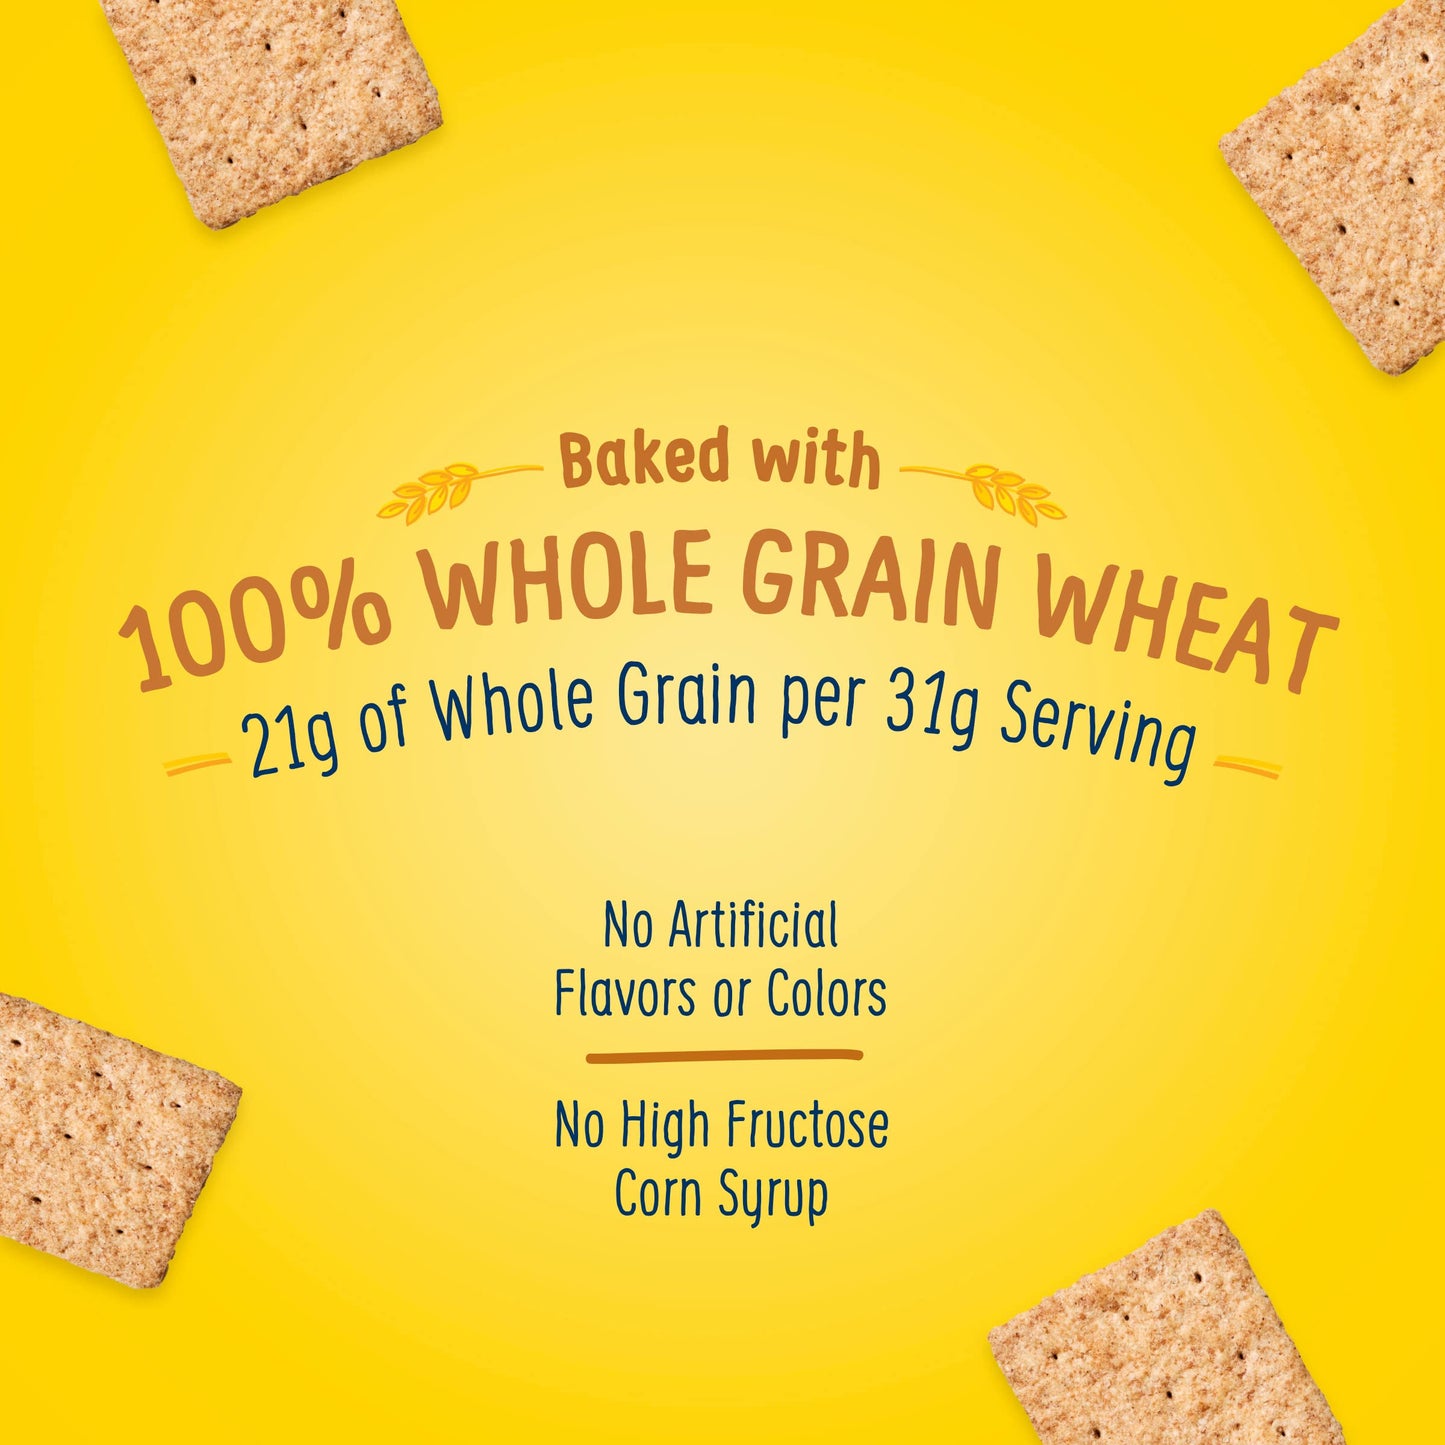 Wheat Thins Original Whole Grain Wheat Crackers, 8.5 oz